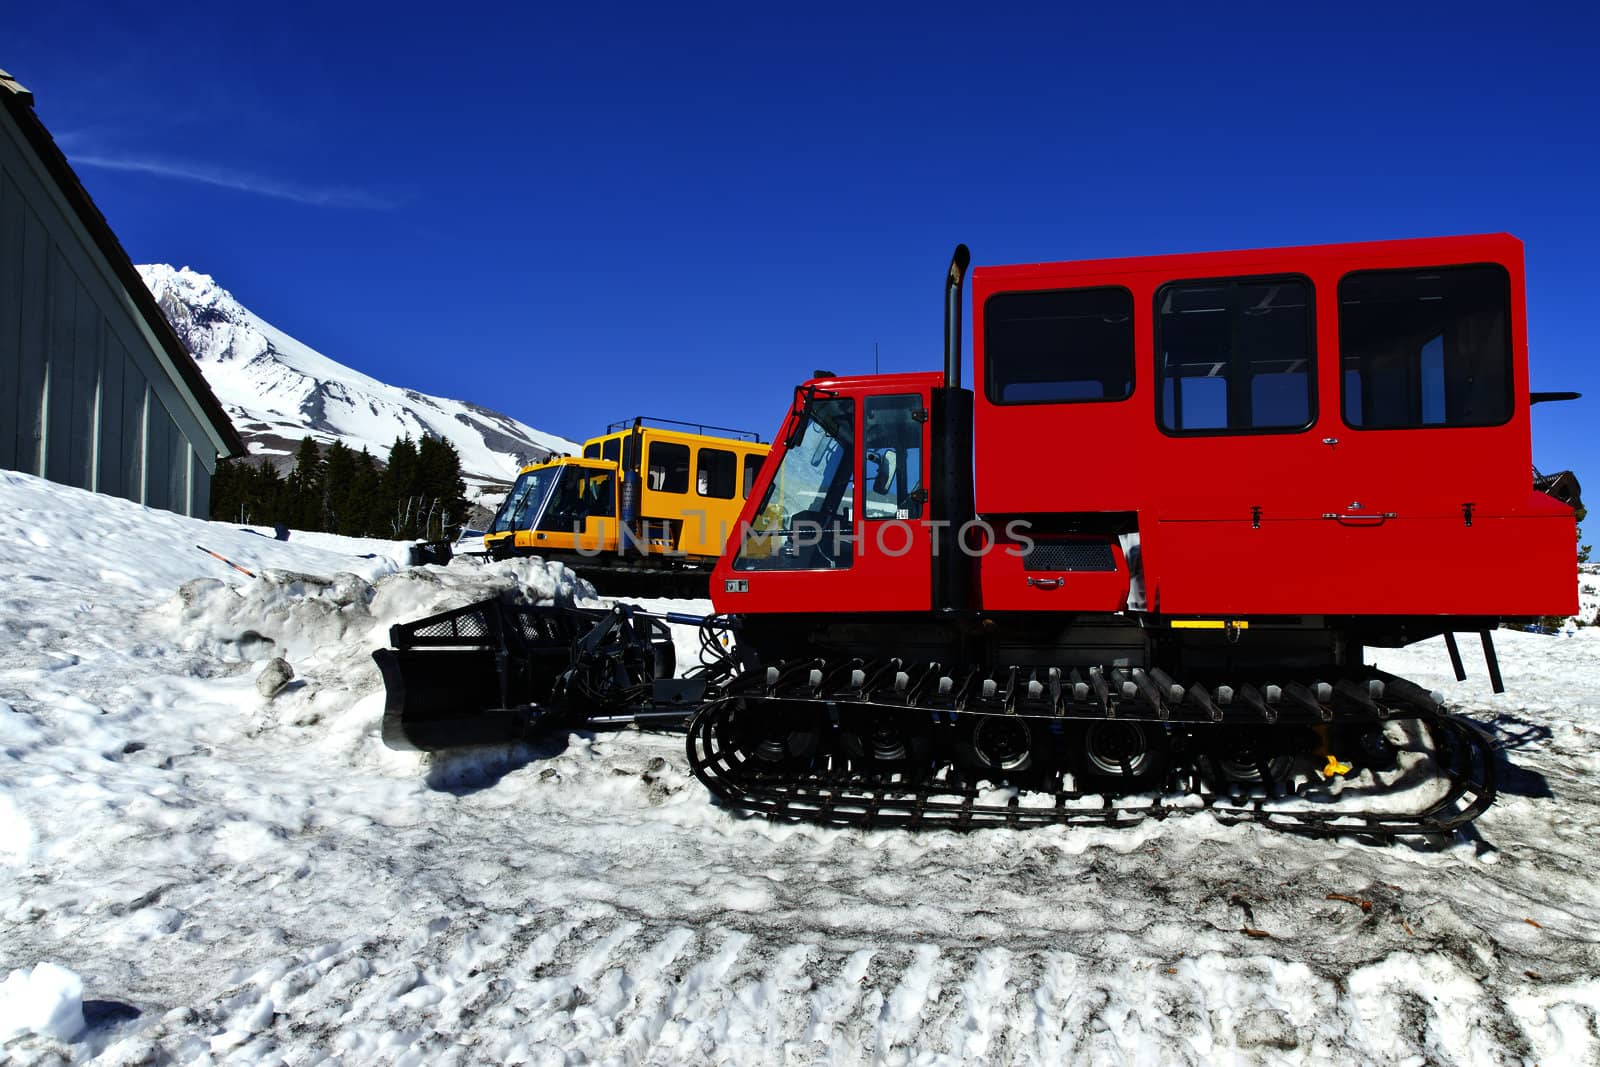 Snow plows machines at Timberline Lodge Mt. Hood Oregon.